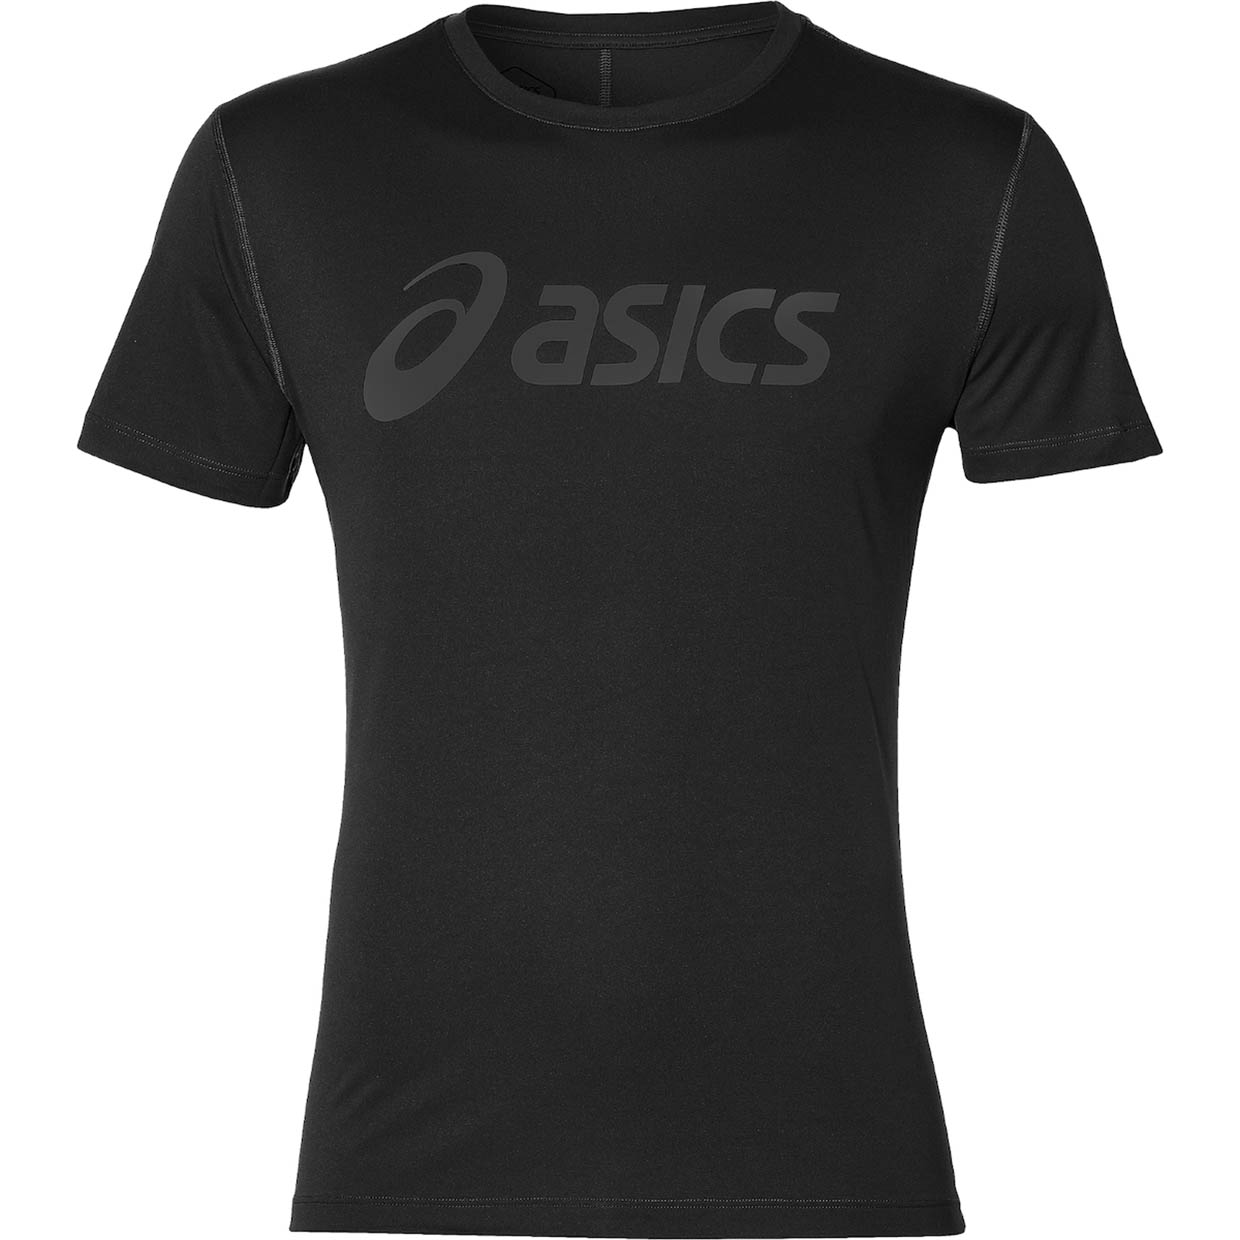 Мужская футболка Asics Silver SS 2011A474-001